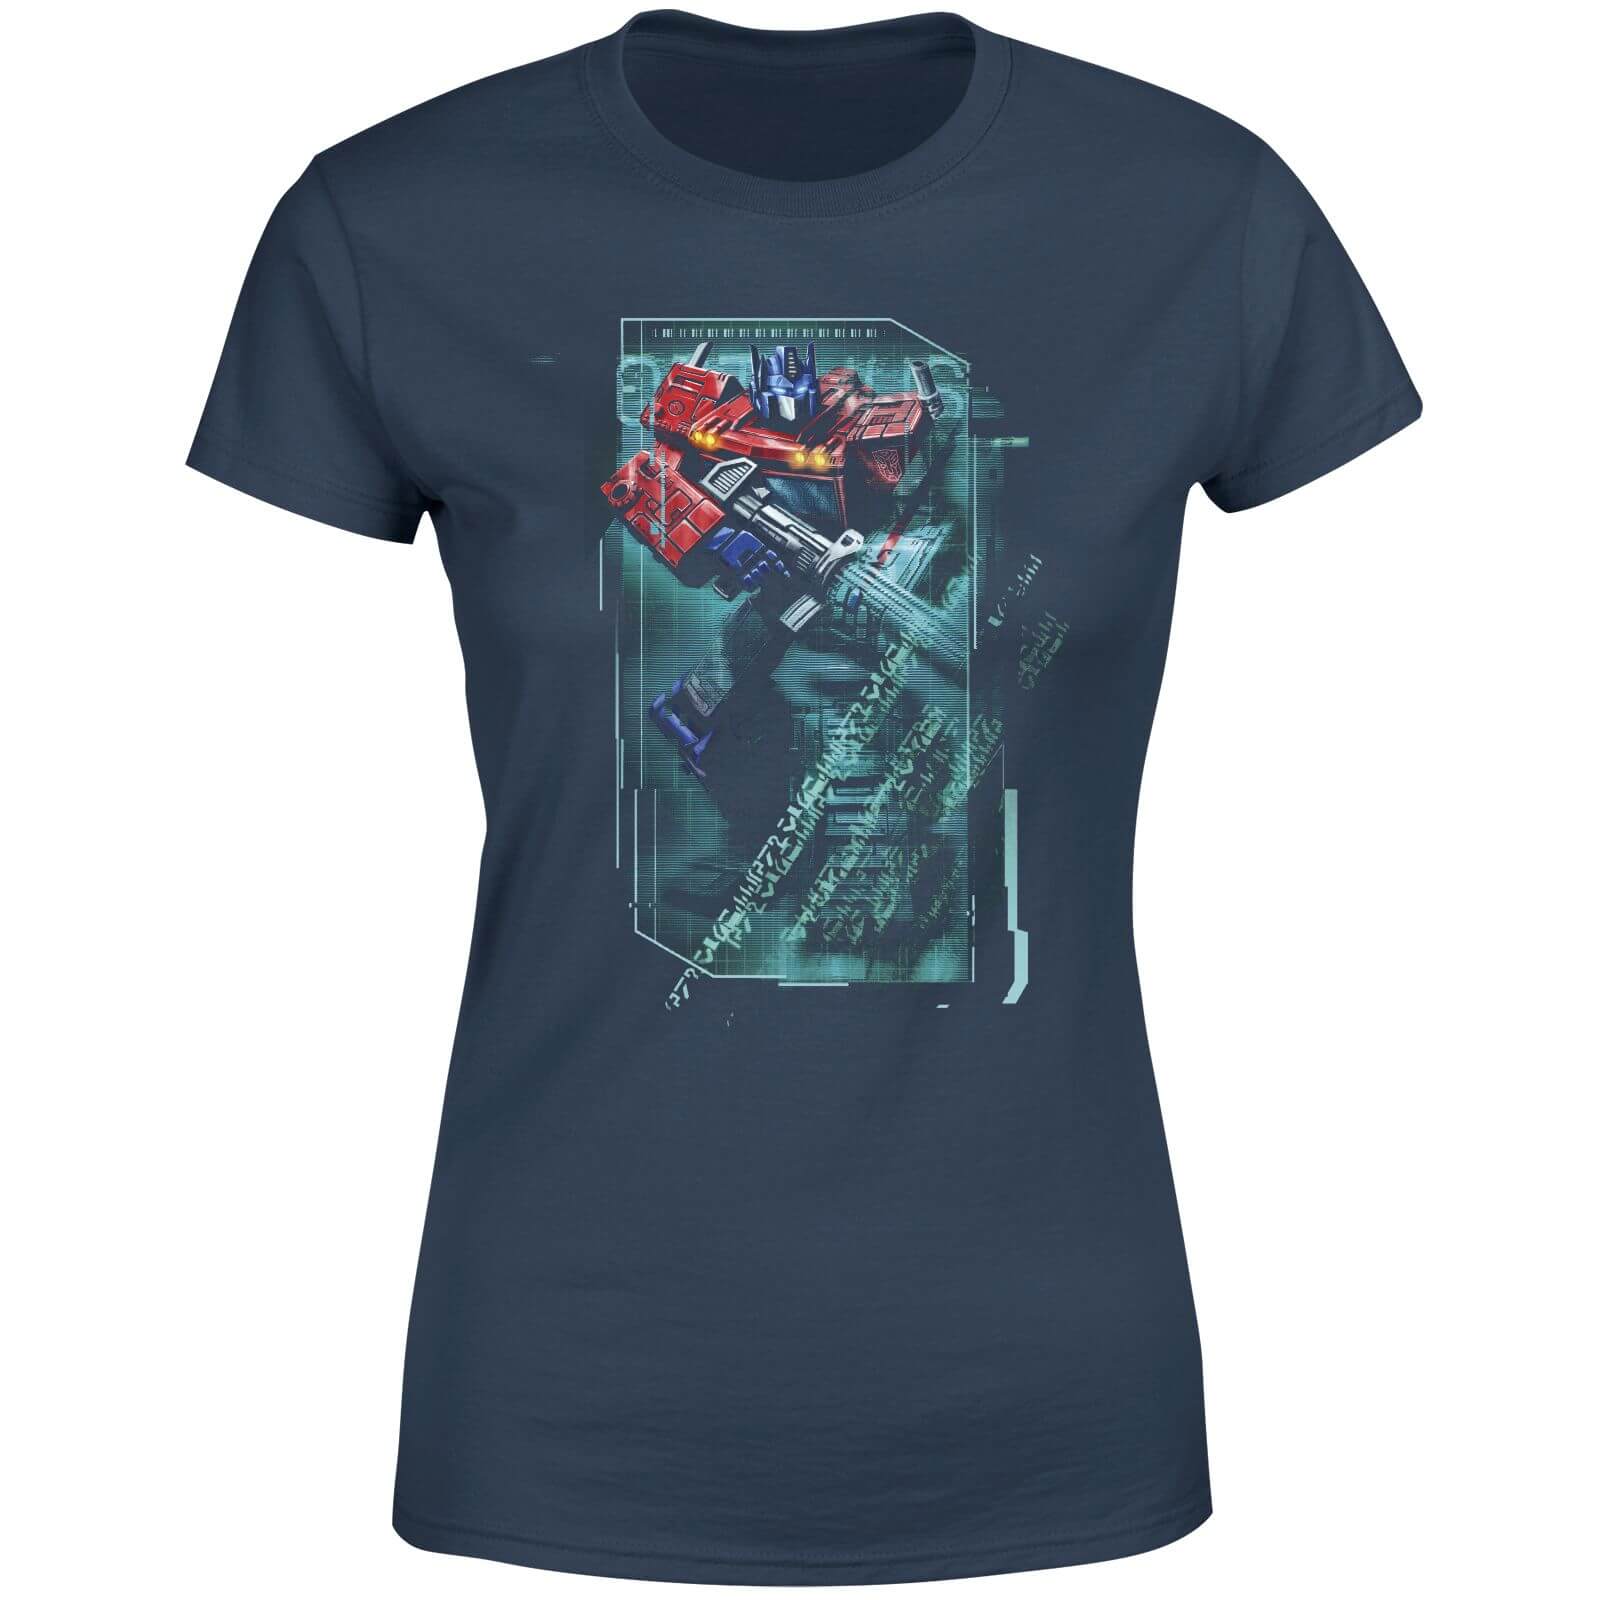 Transformers Optimus Prime Tech Women's T-Shirt - Navy - S - Navy